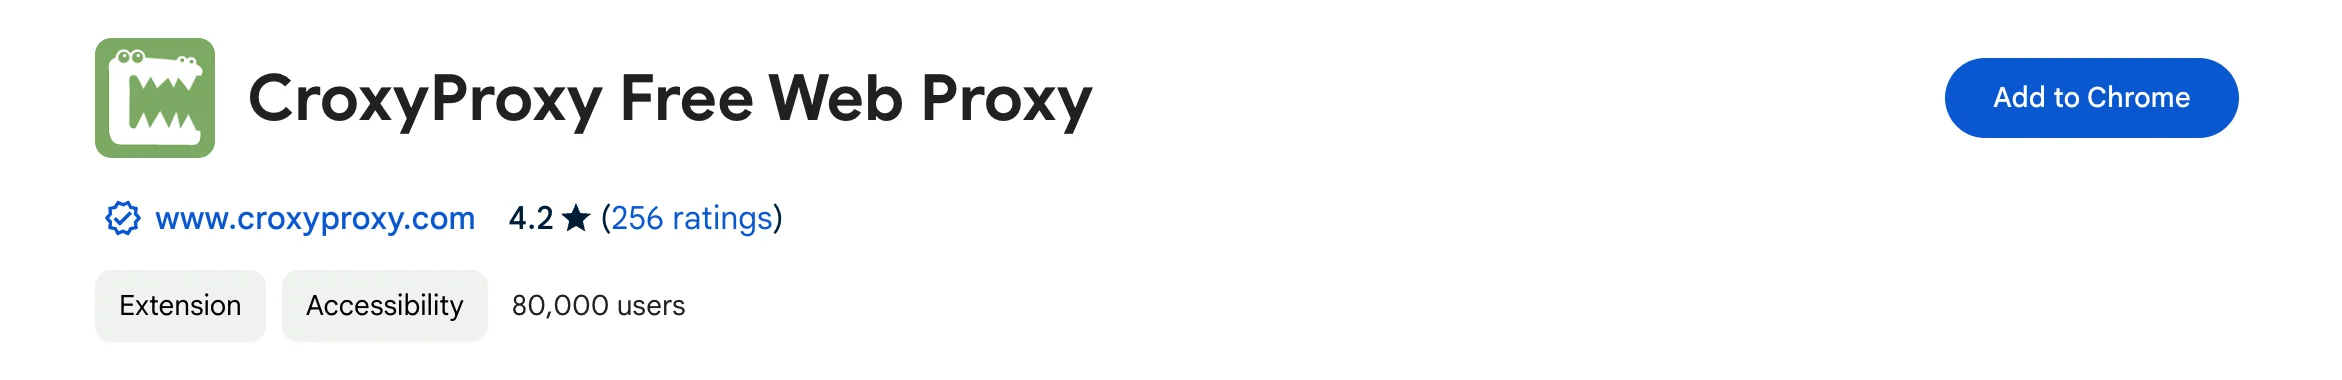 CroxyProxy Chrome Extension